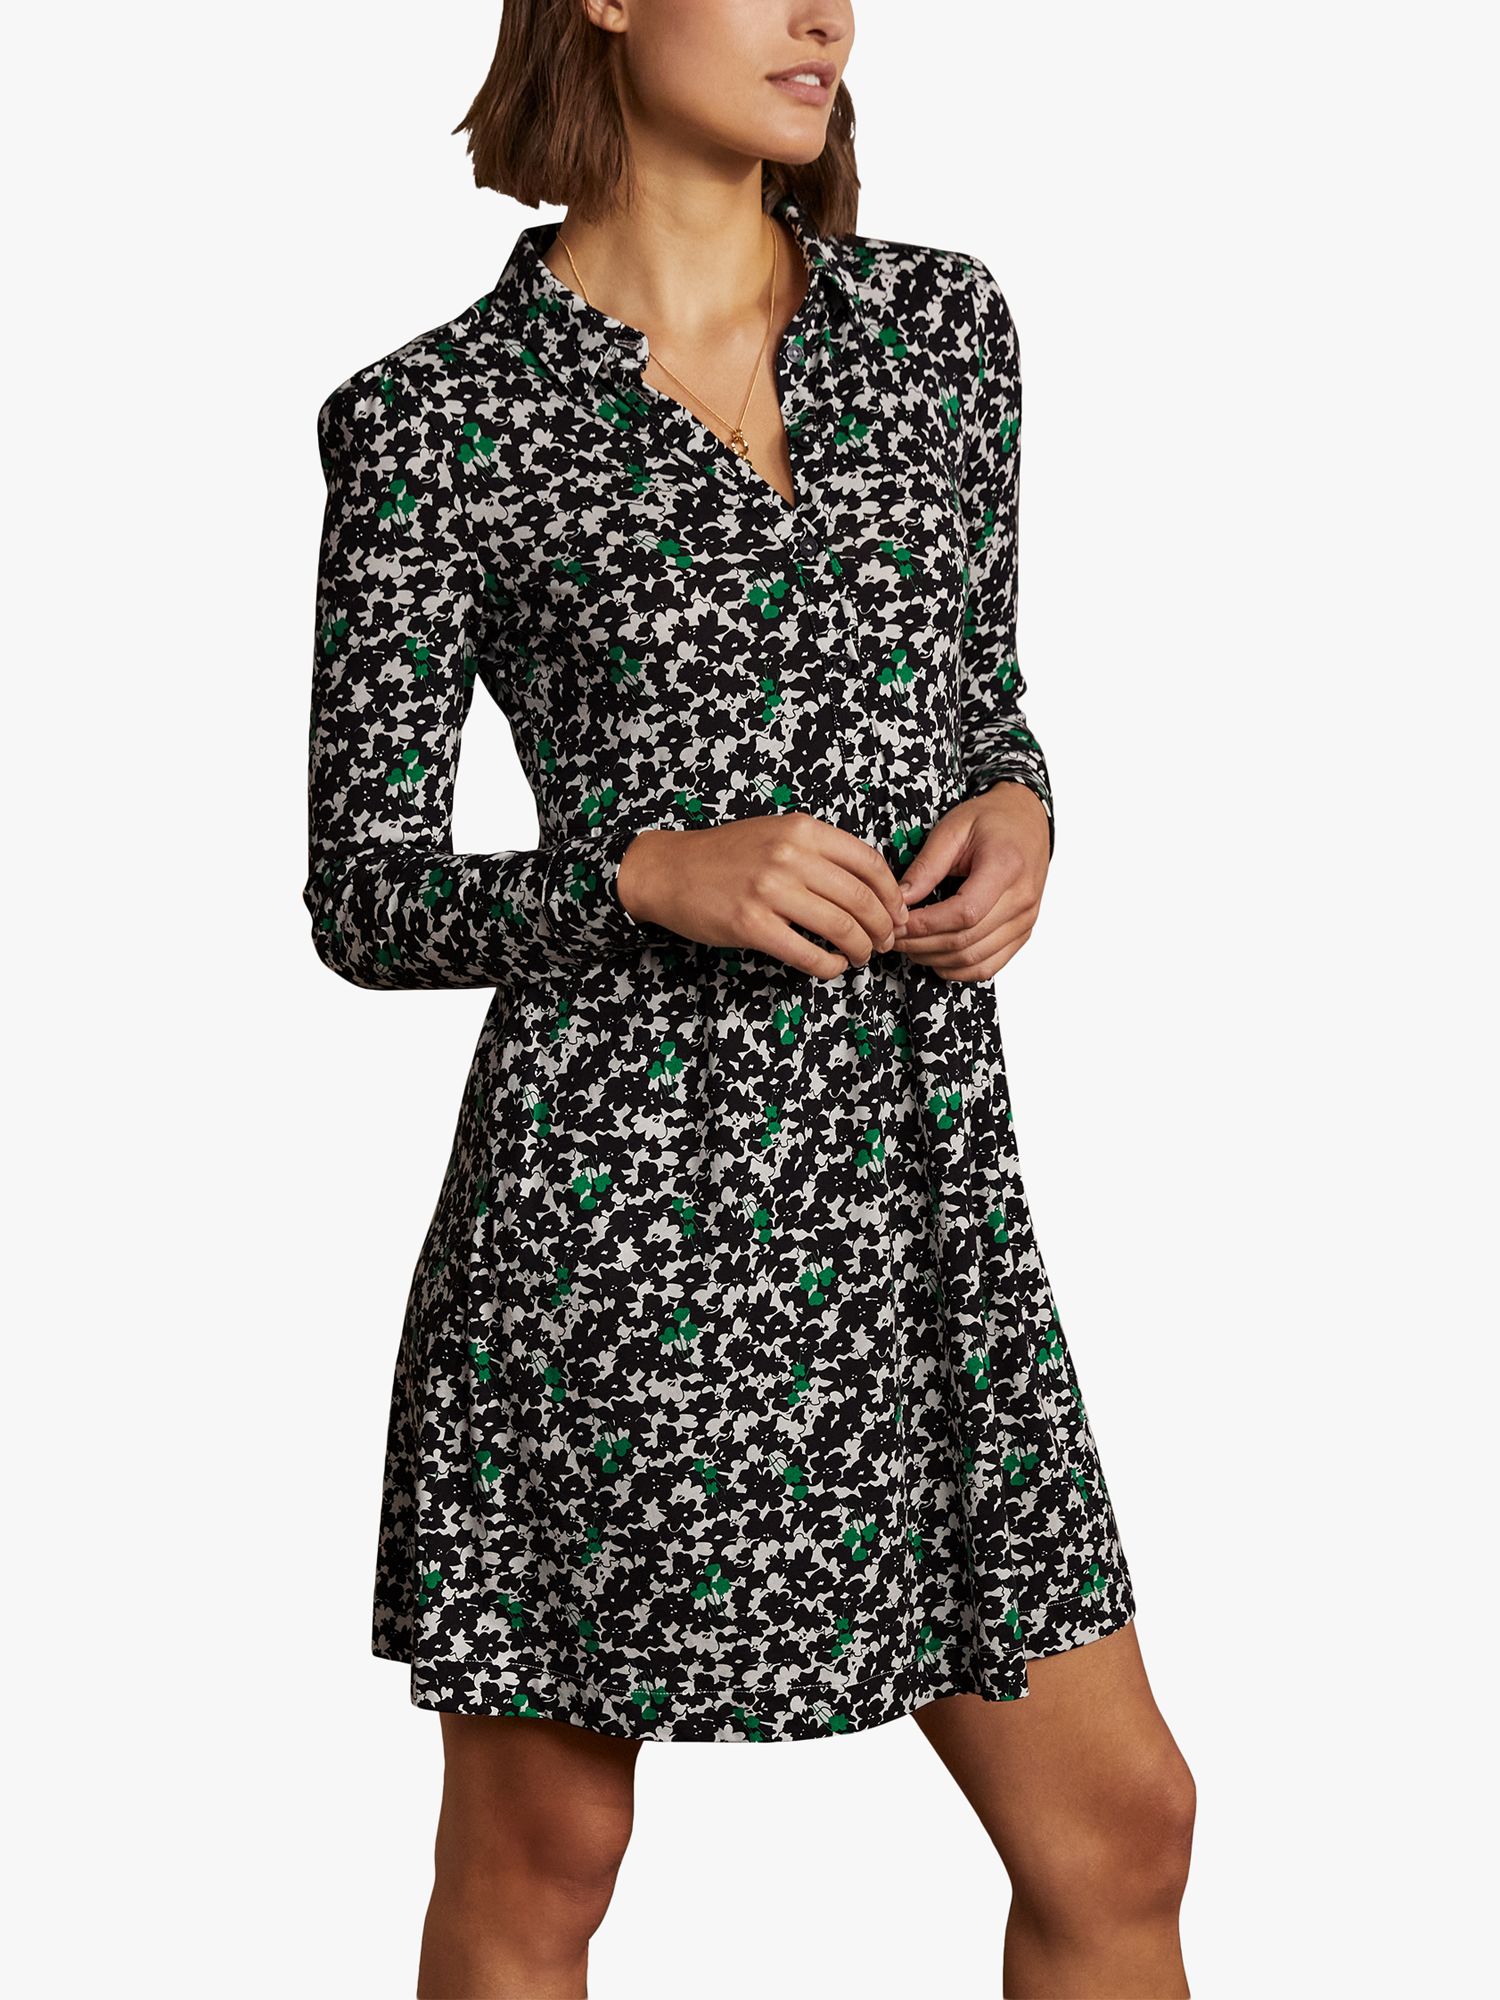 Boden Alma Floral Jersey Shirt Dress, Black/Camo